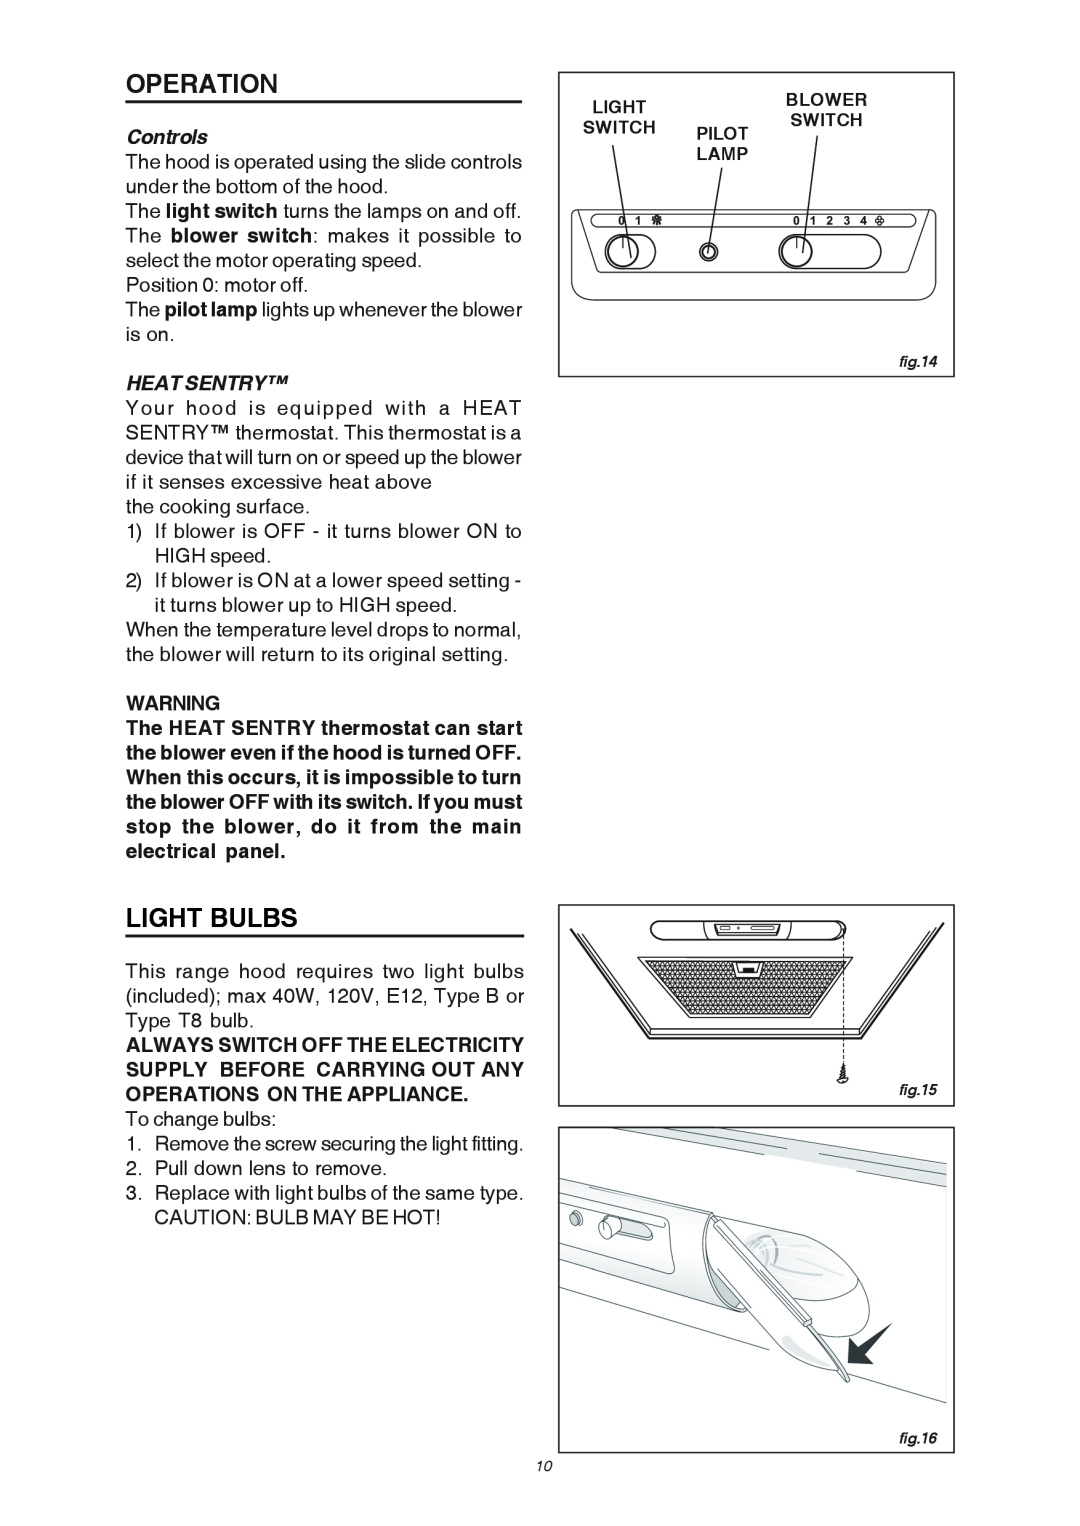 Broan RM503004 manual Operation, Light Bulbs, Controls, Heat Sentry 